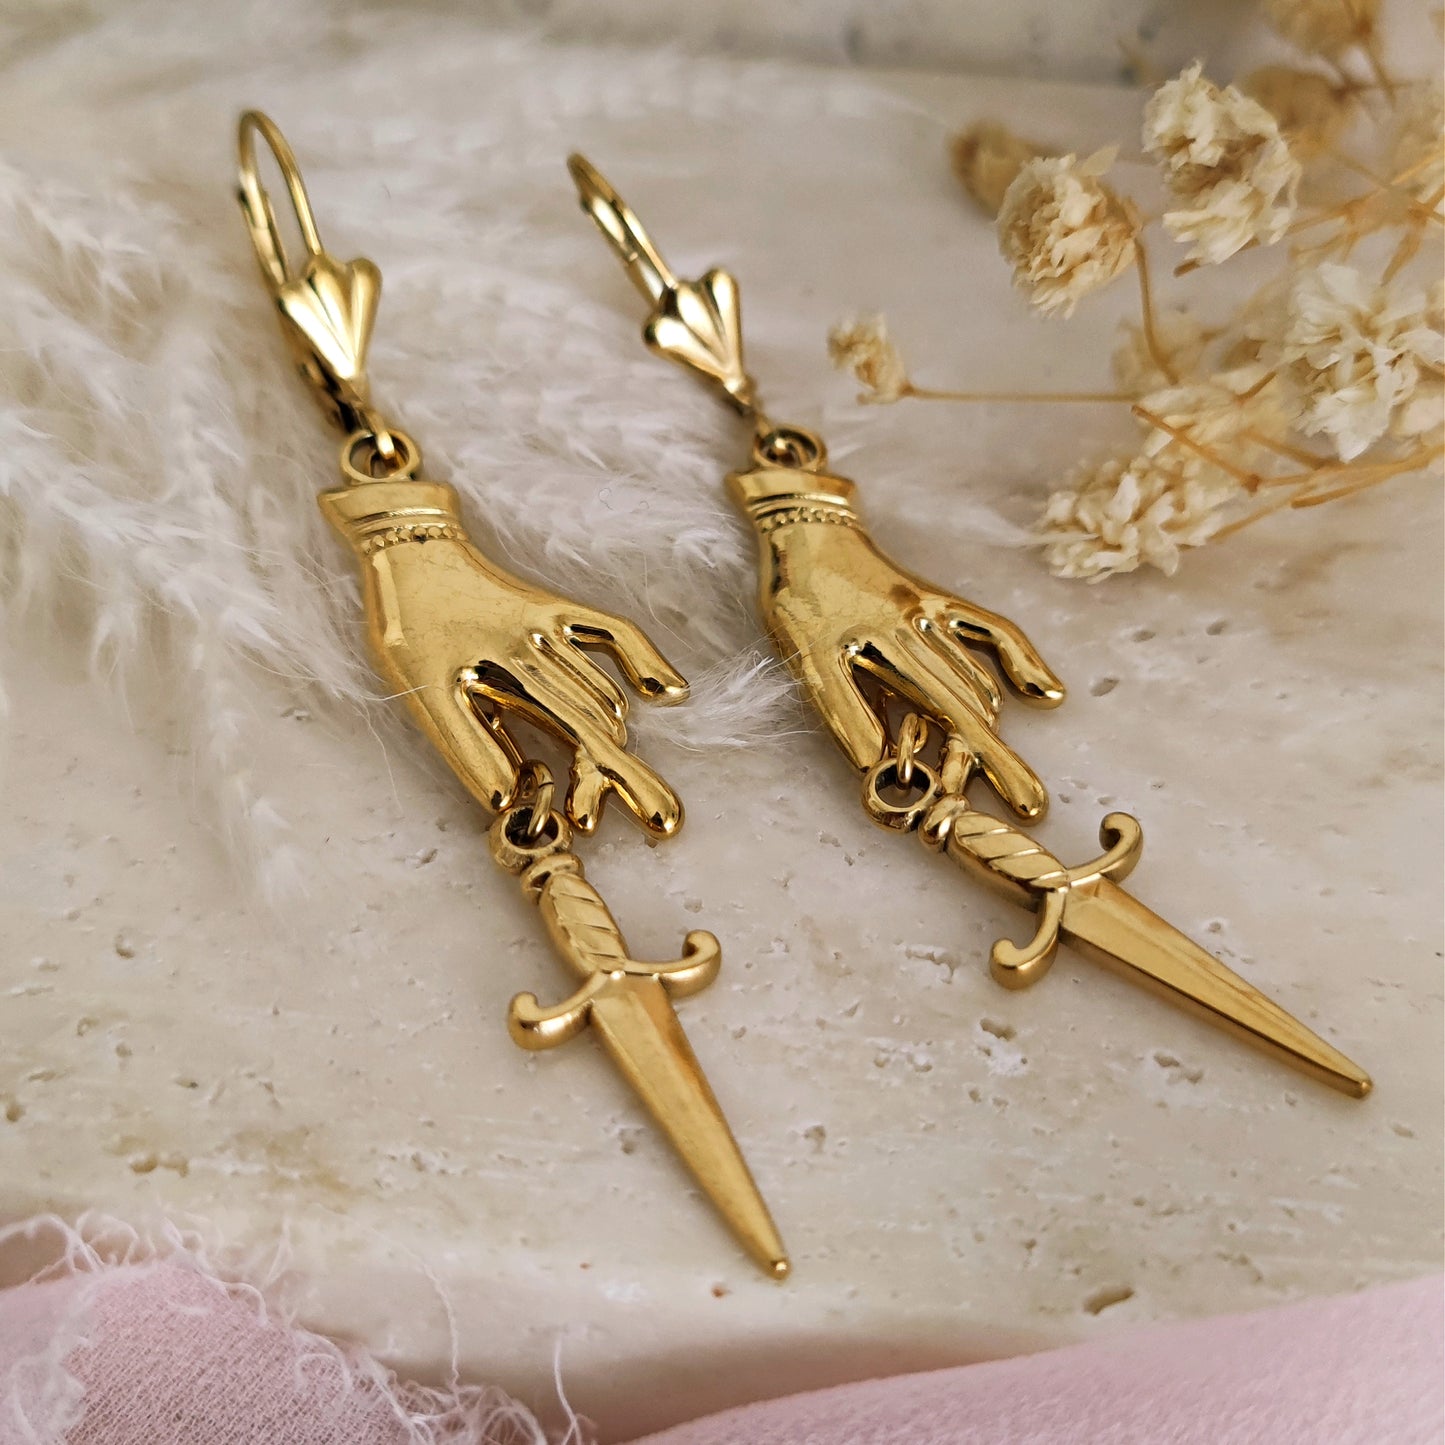 Dark Academia Hand and Sword Earrings, KnightCore Dagger Earrings, Whimsigoth Long Dangle Earrings, Victorian Gothic Earrings